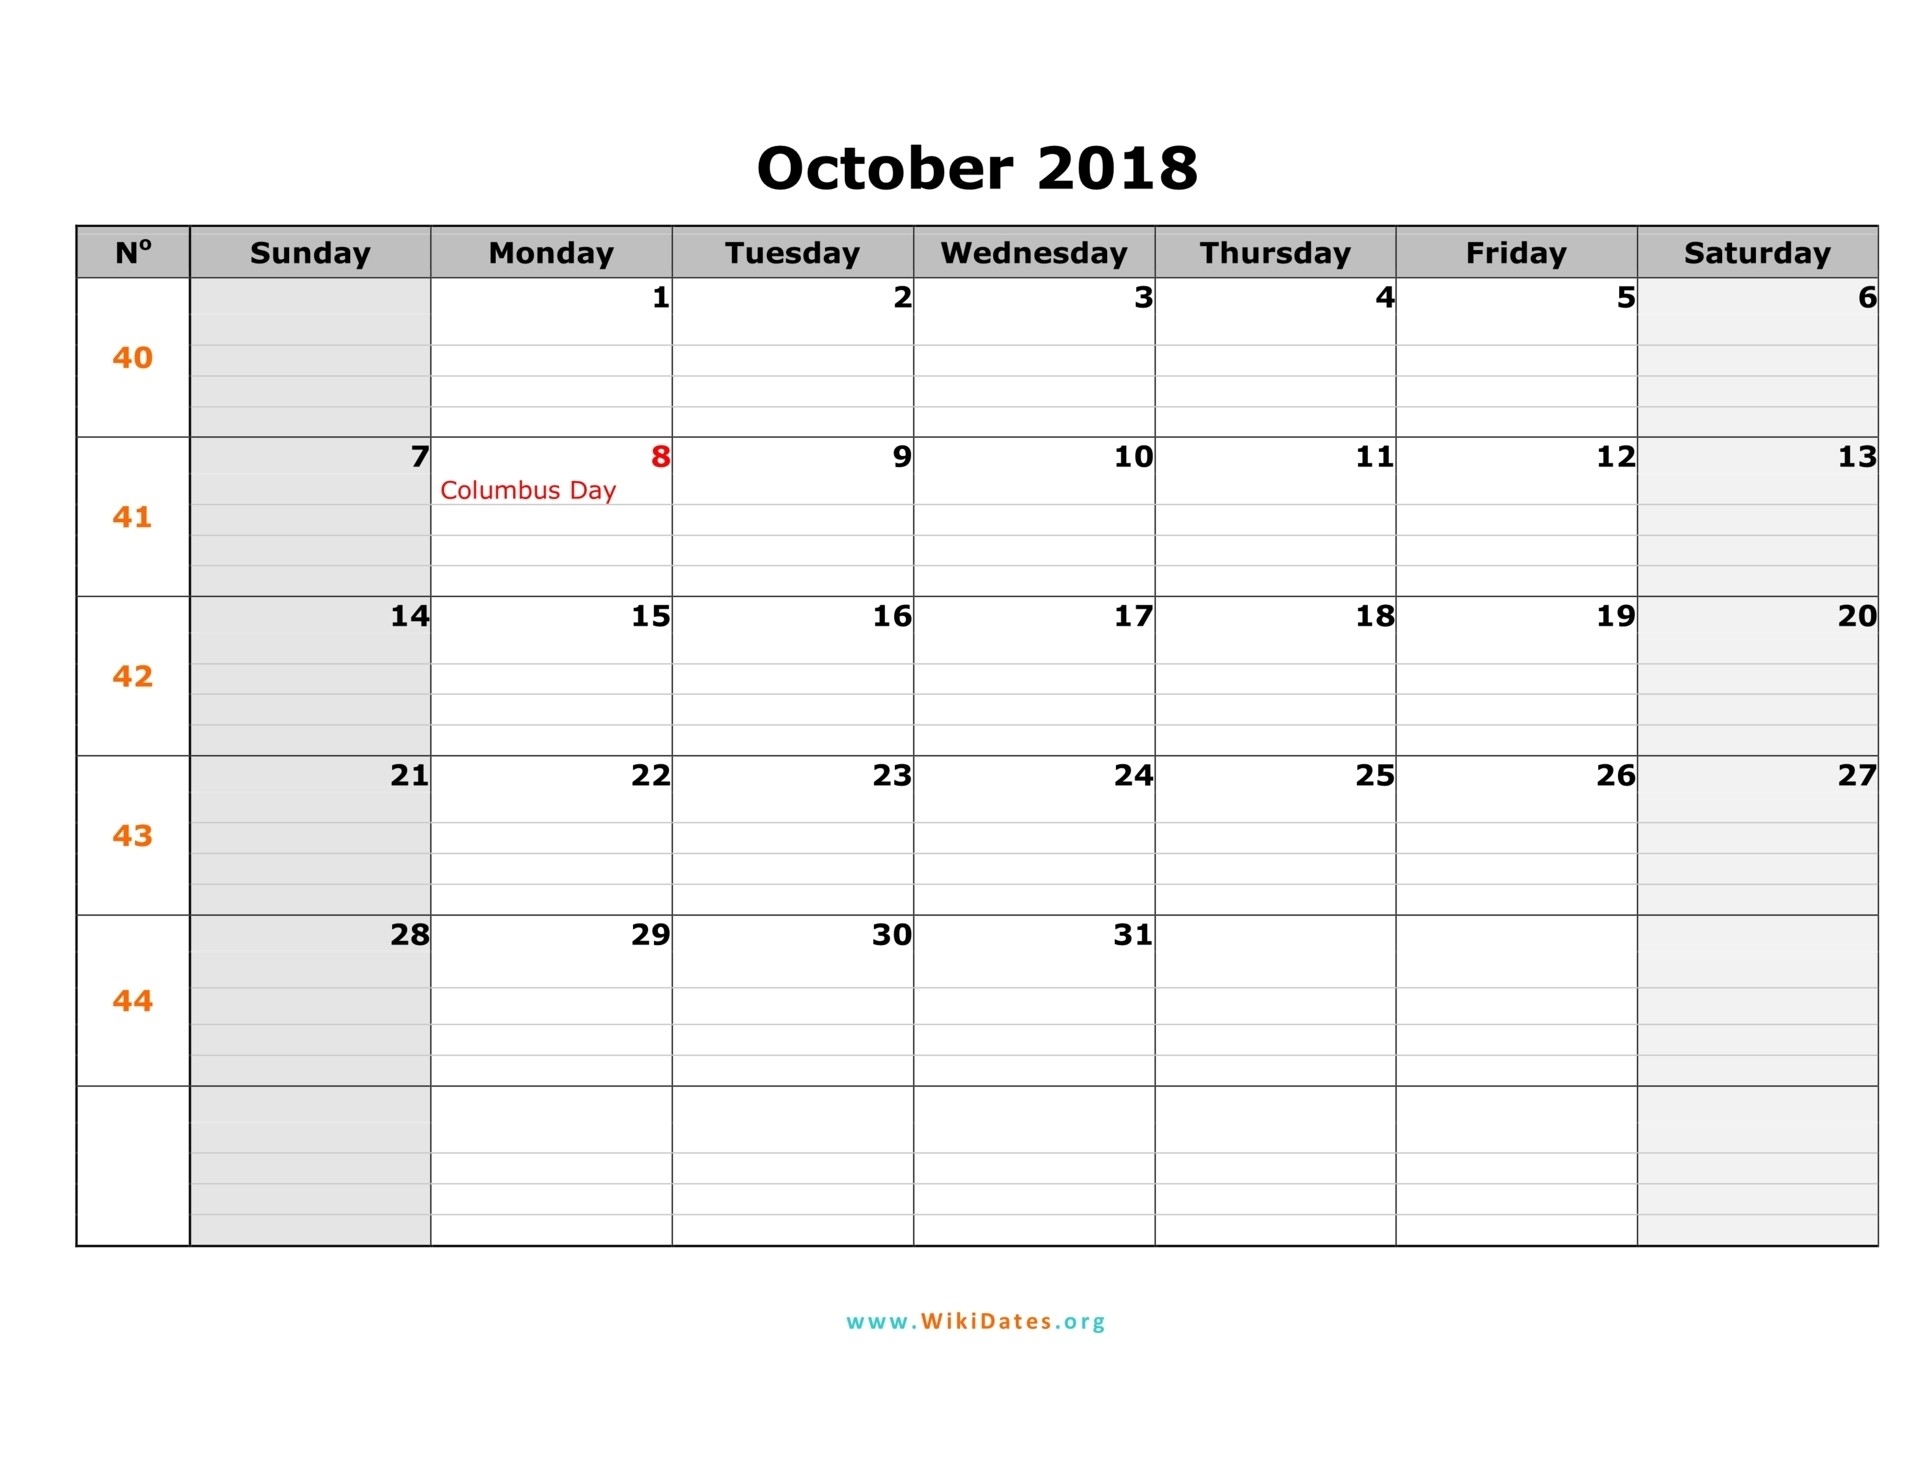 October 2018 Calendar | Wikidates-Jewish Holidays Calendar Format